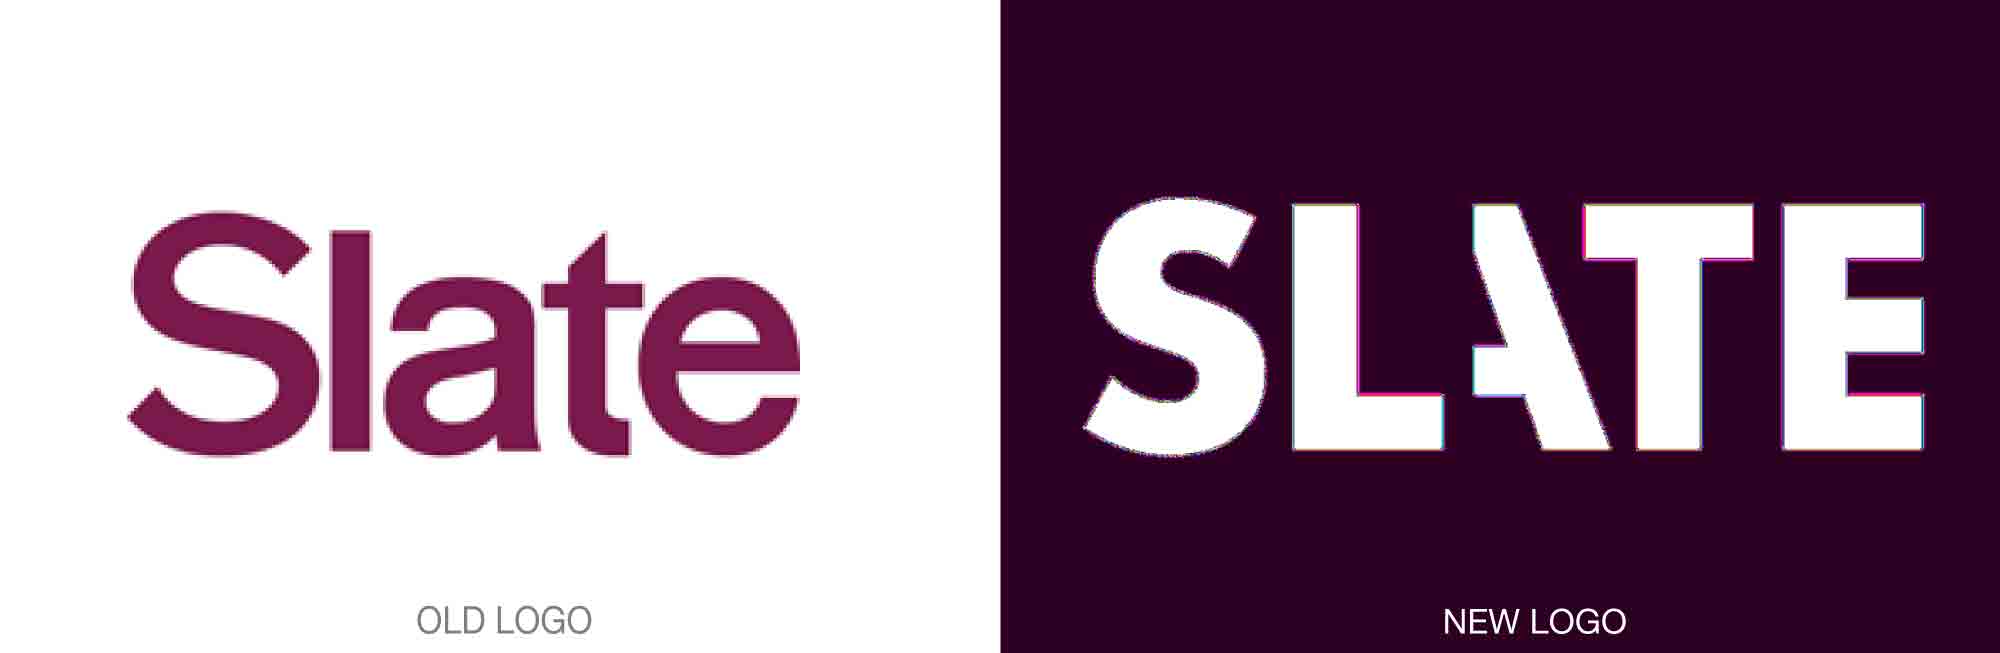 Slate Logo - Slate's New Everything | Articles | LogoLounge